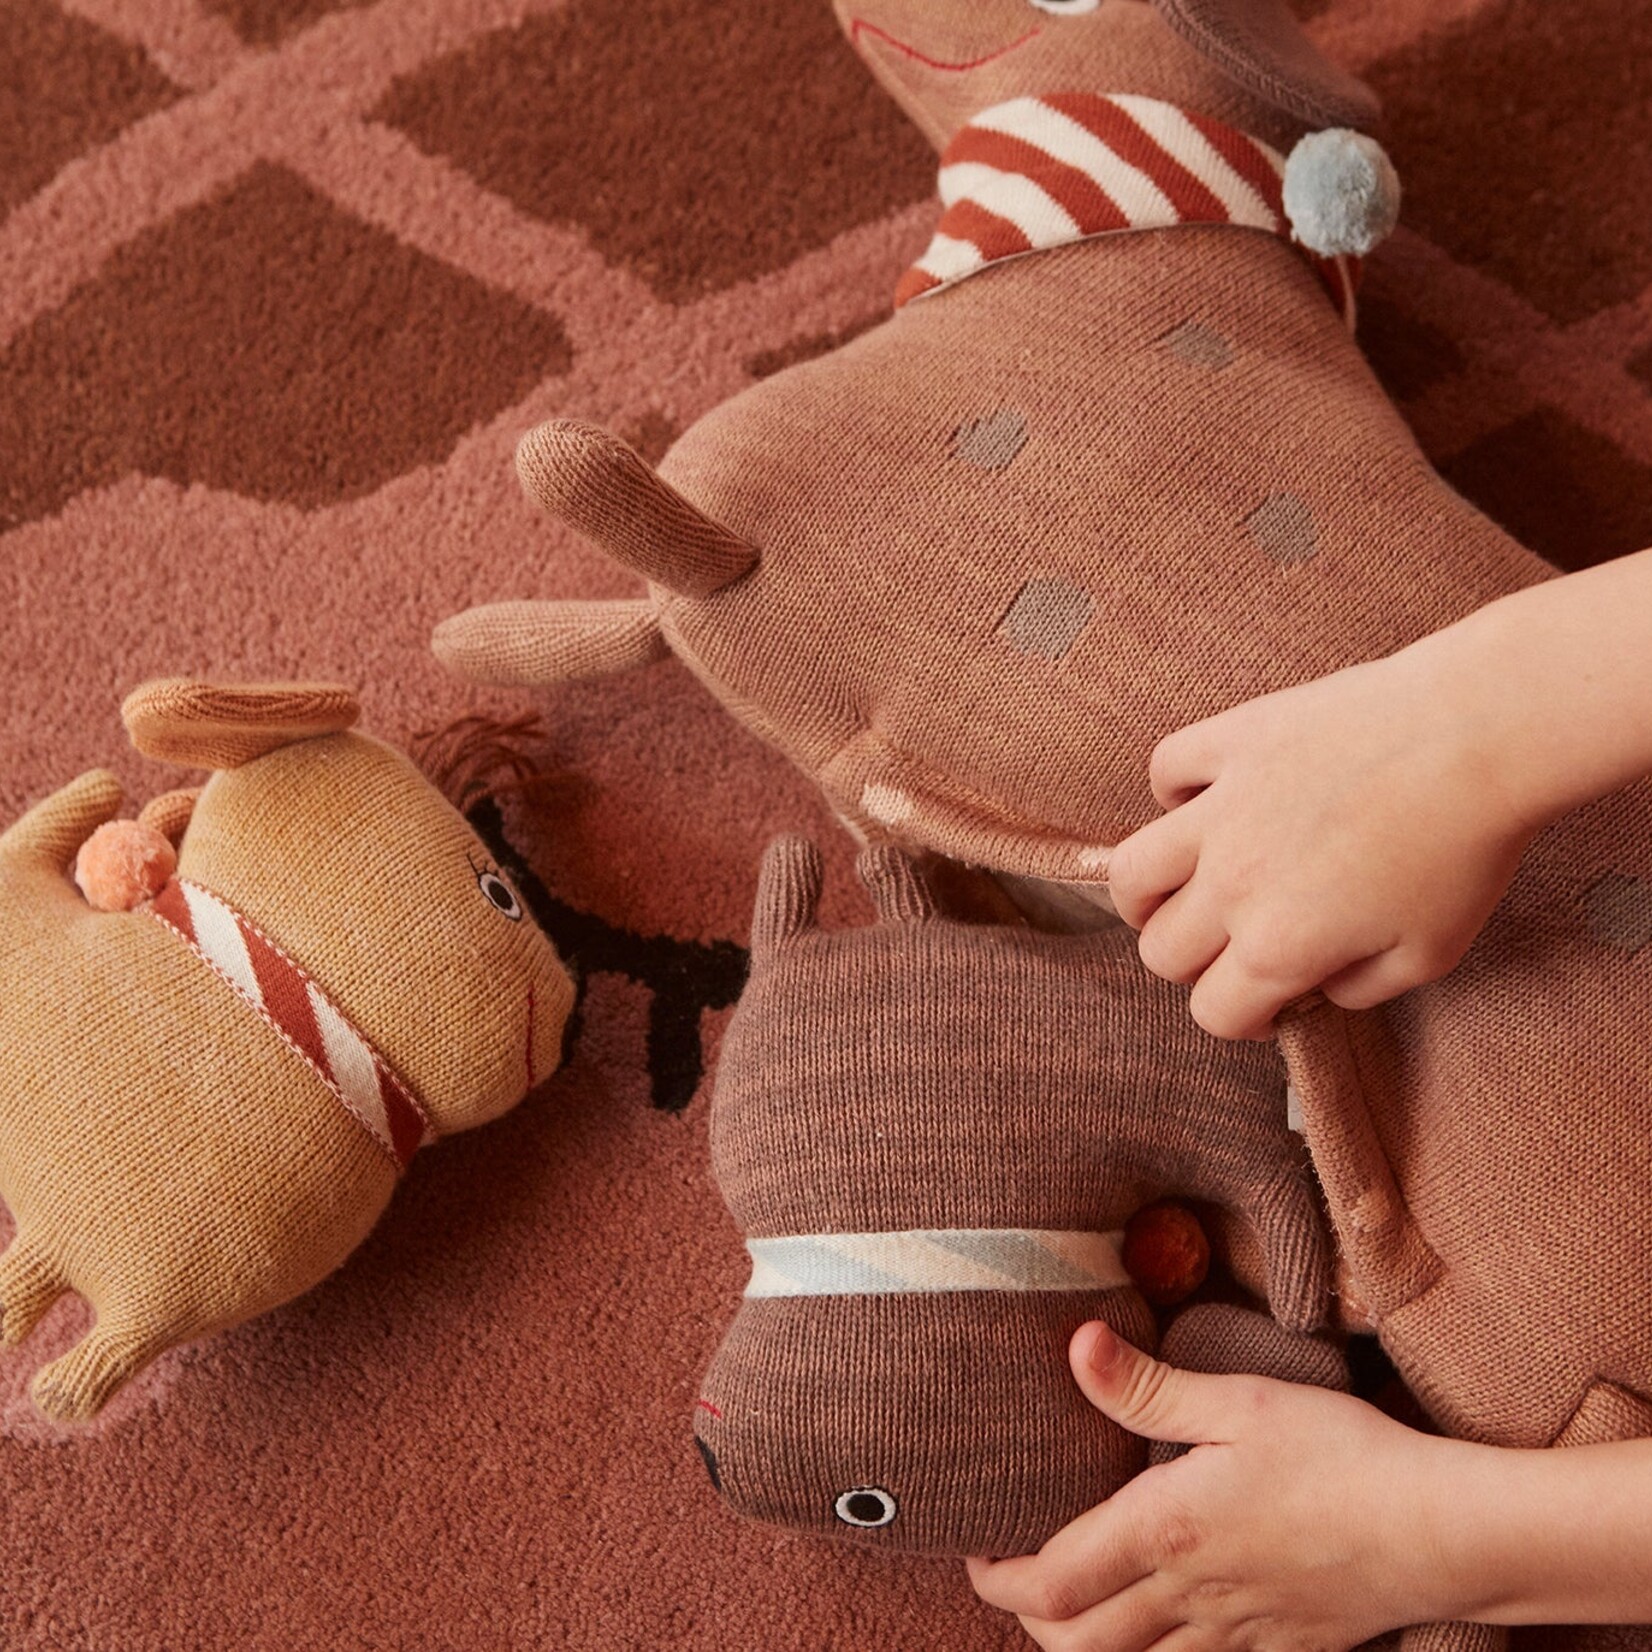 OYOY MINI Hunsi Hond Met Twee Puppies Coco & Max - Multi